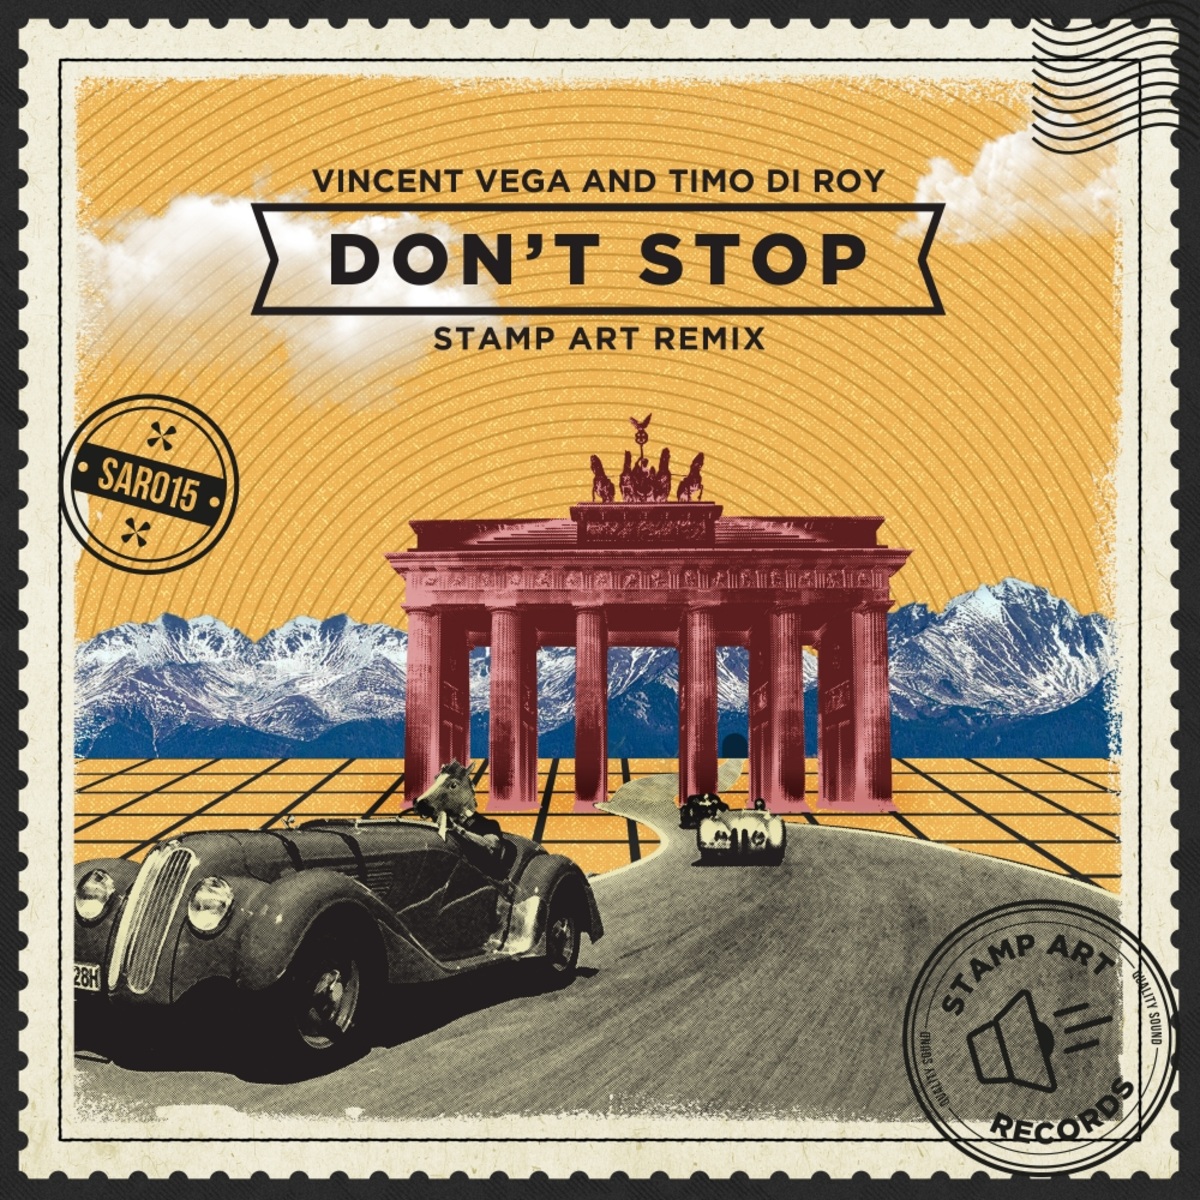 Vincent Vega & Timo Di Roy - Don't Stop (Stamp Art Remix) / Stamp Art Records